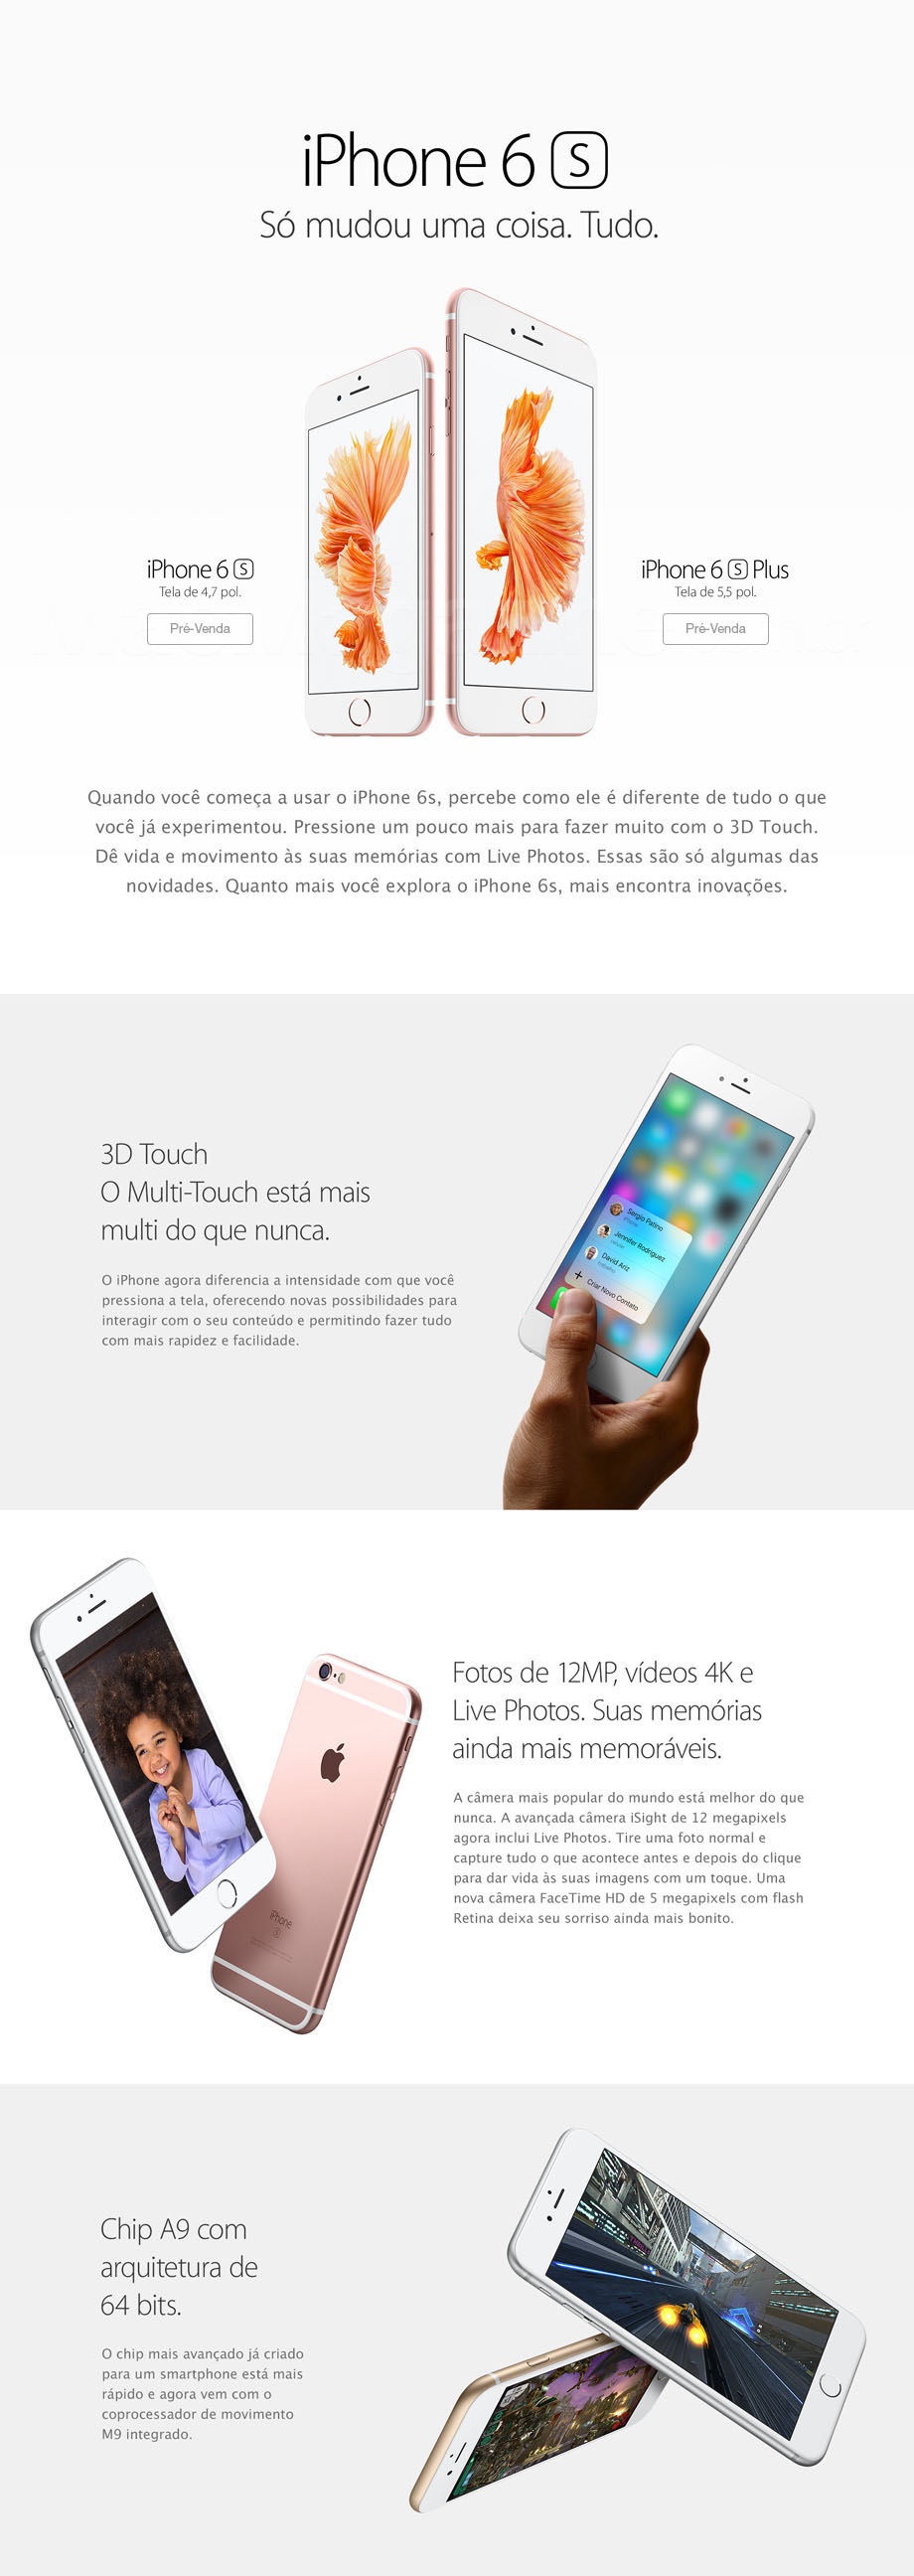 IPhone 6s Infographic